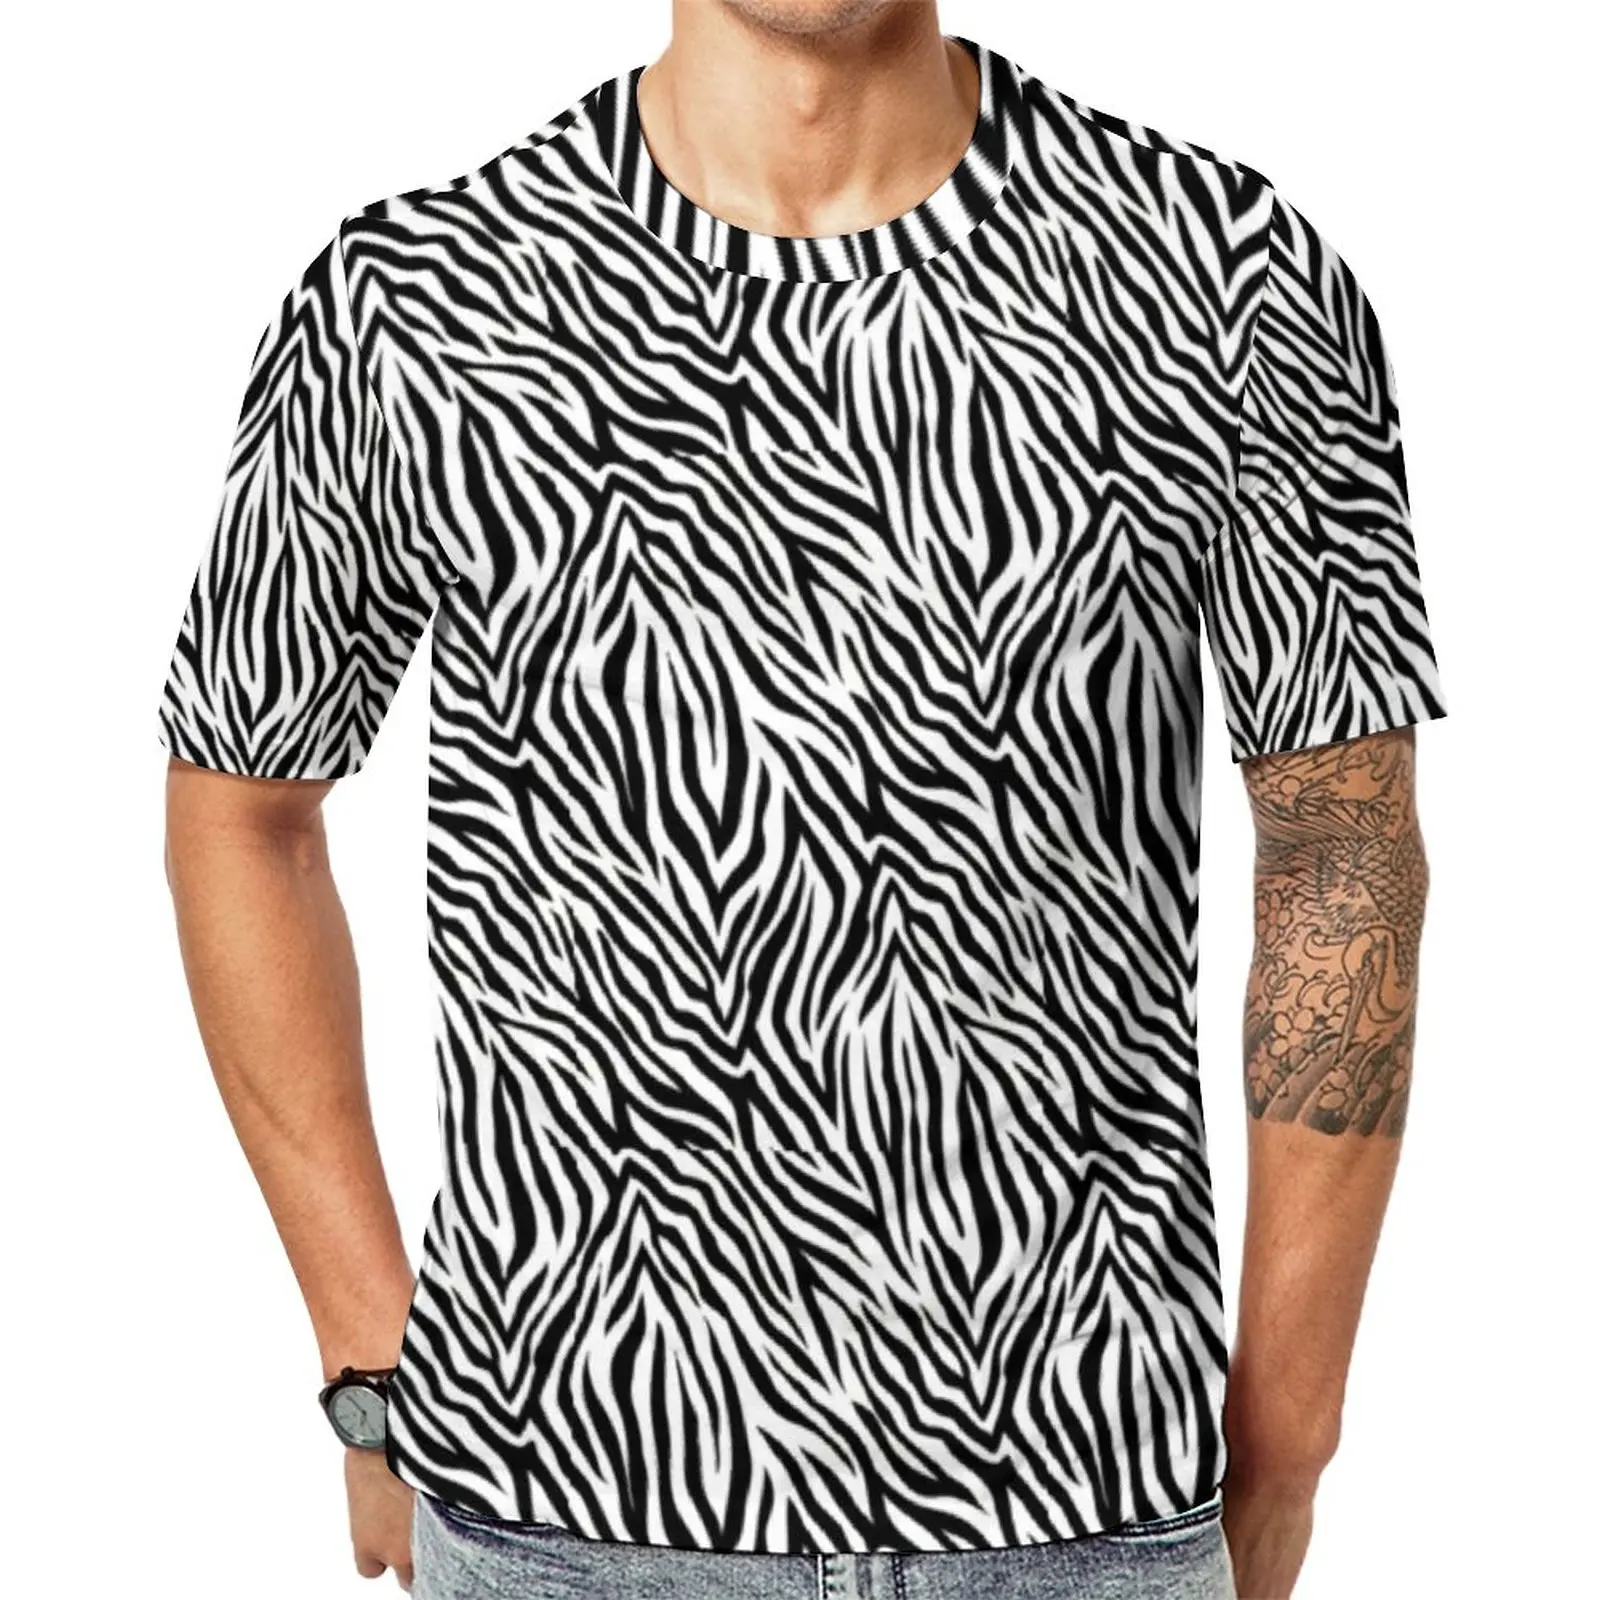 

Zebra Stripes T Shirt Trendy Black White Animal Men Retro T Shirts Beach Graphic Tees Short Sleeve EMO Plus Size Tops Present